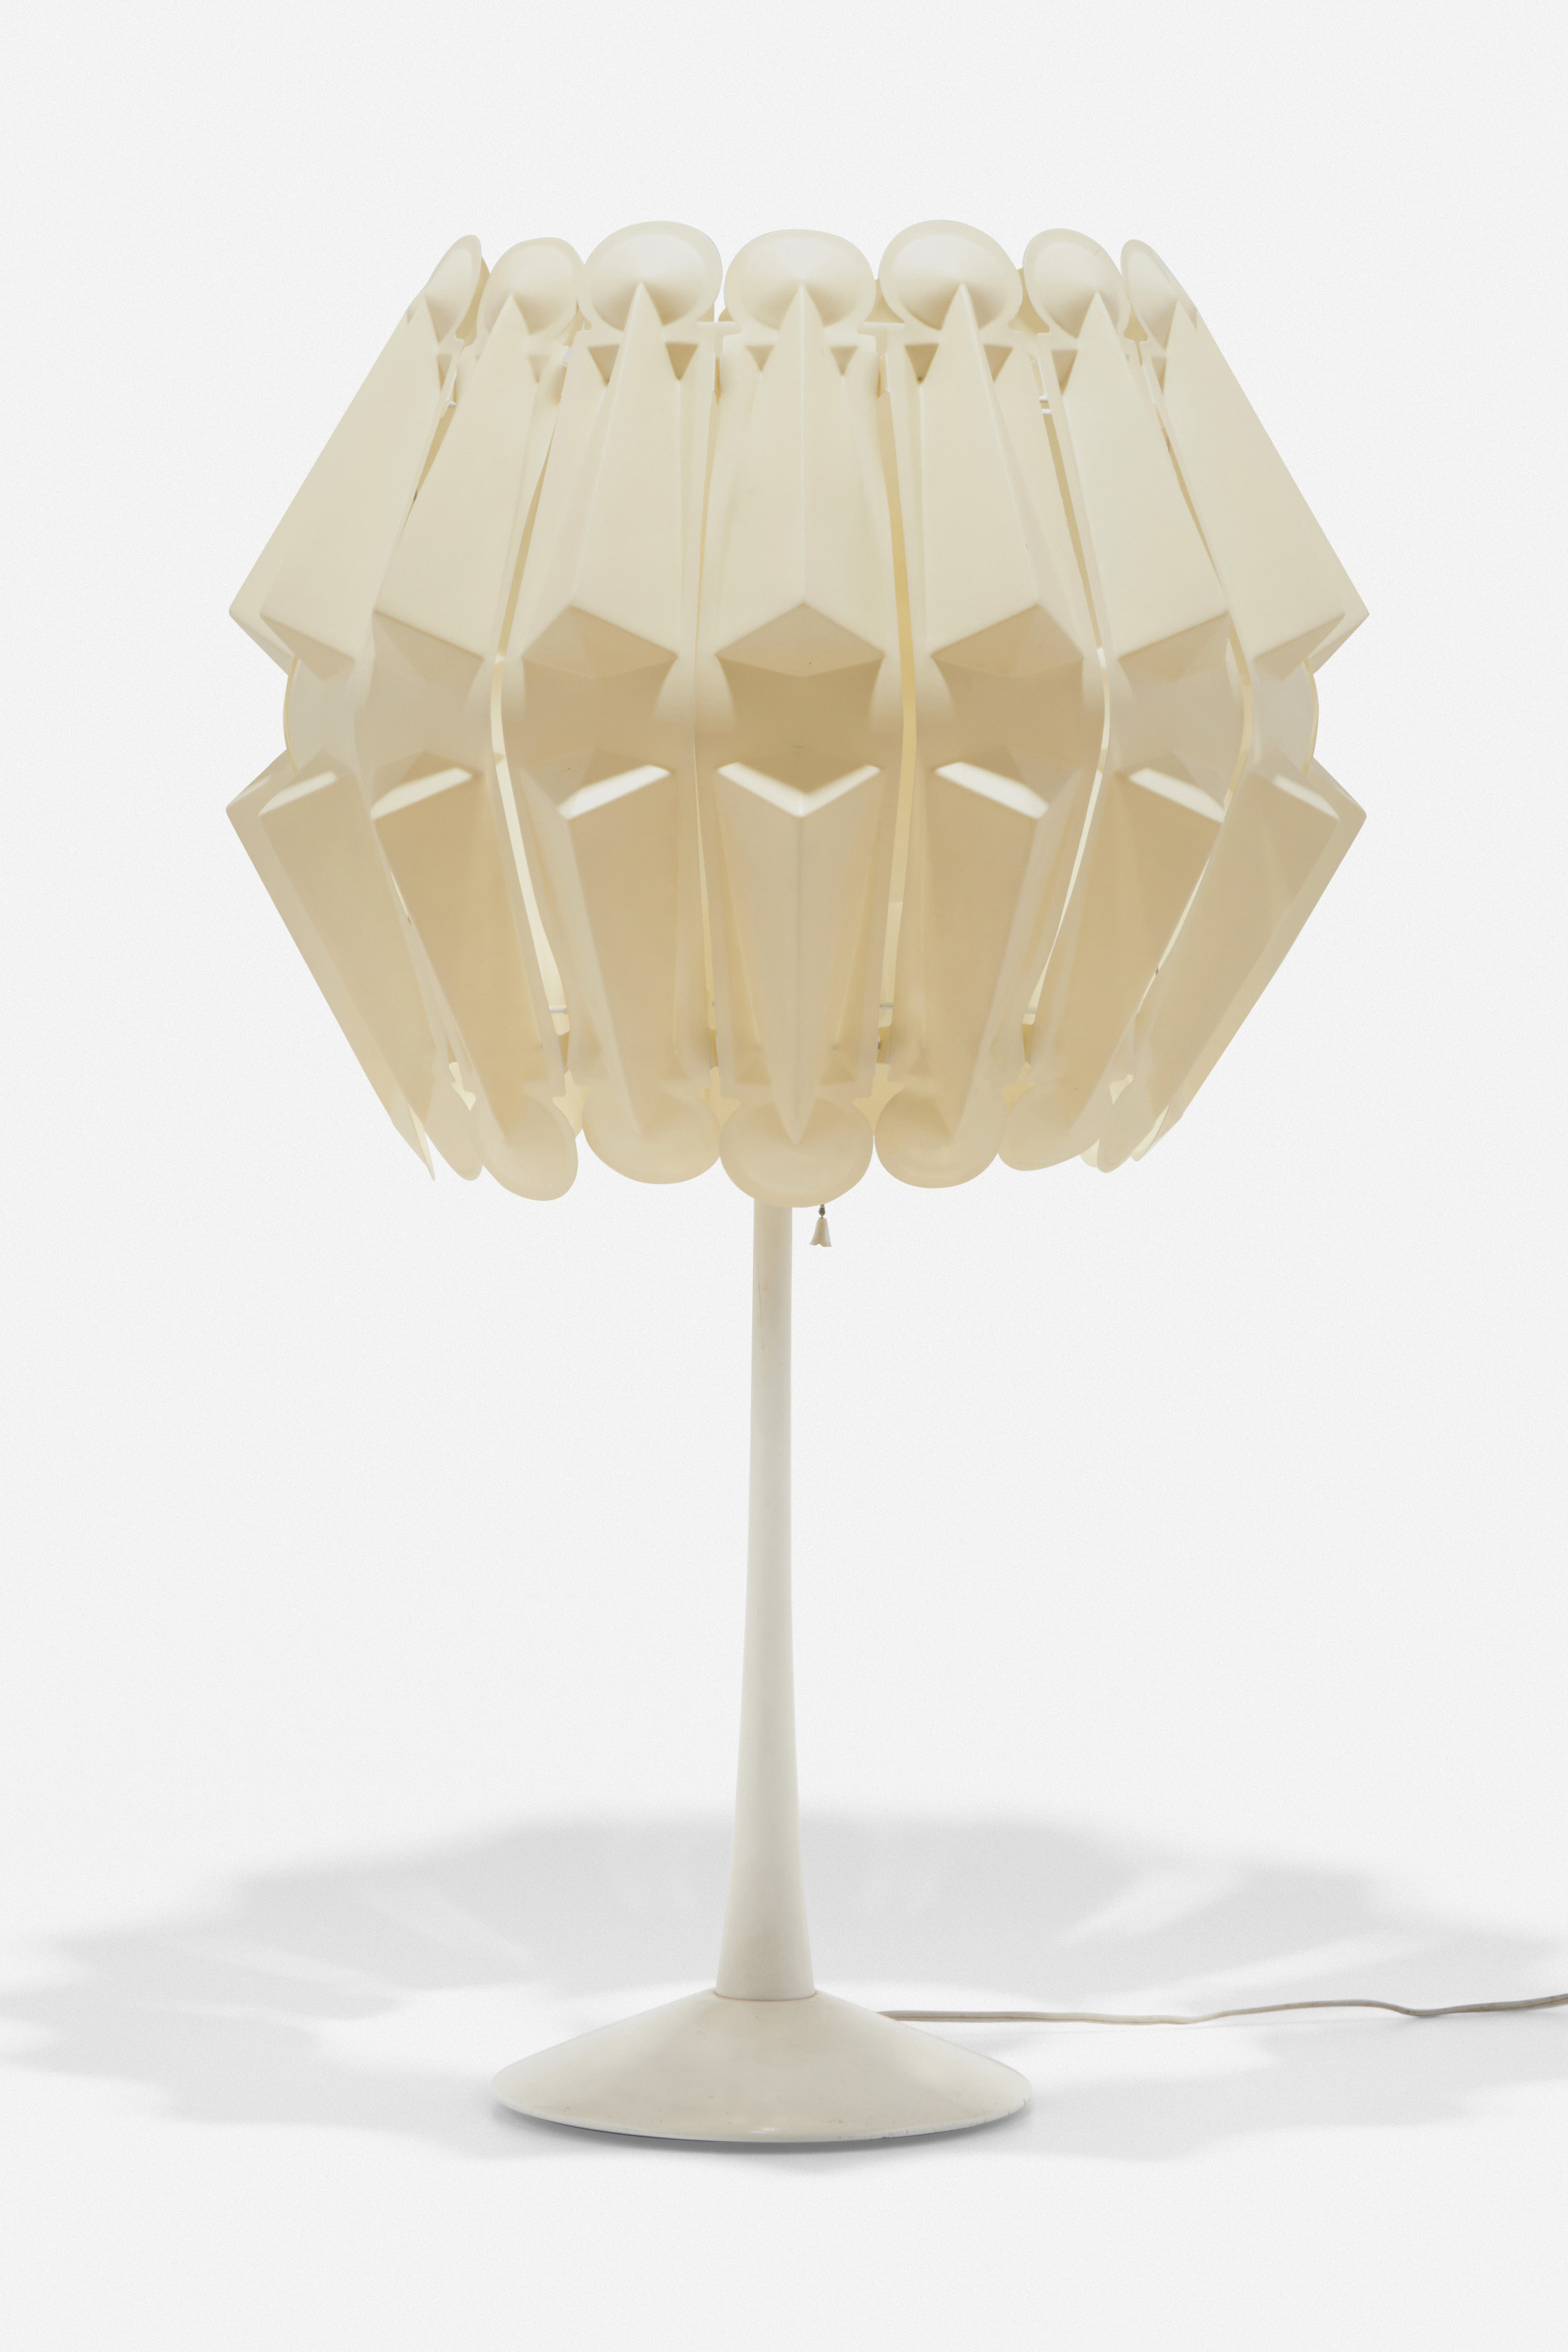 Herman Miller Vintage - George Nelson and Associates Lantern Lamp